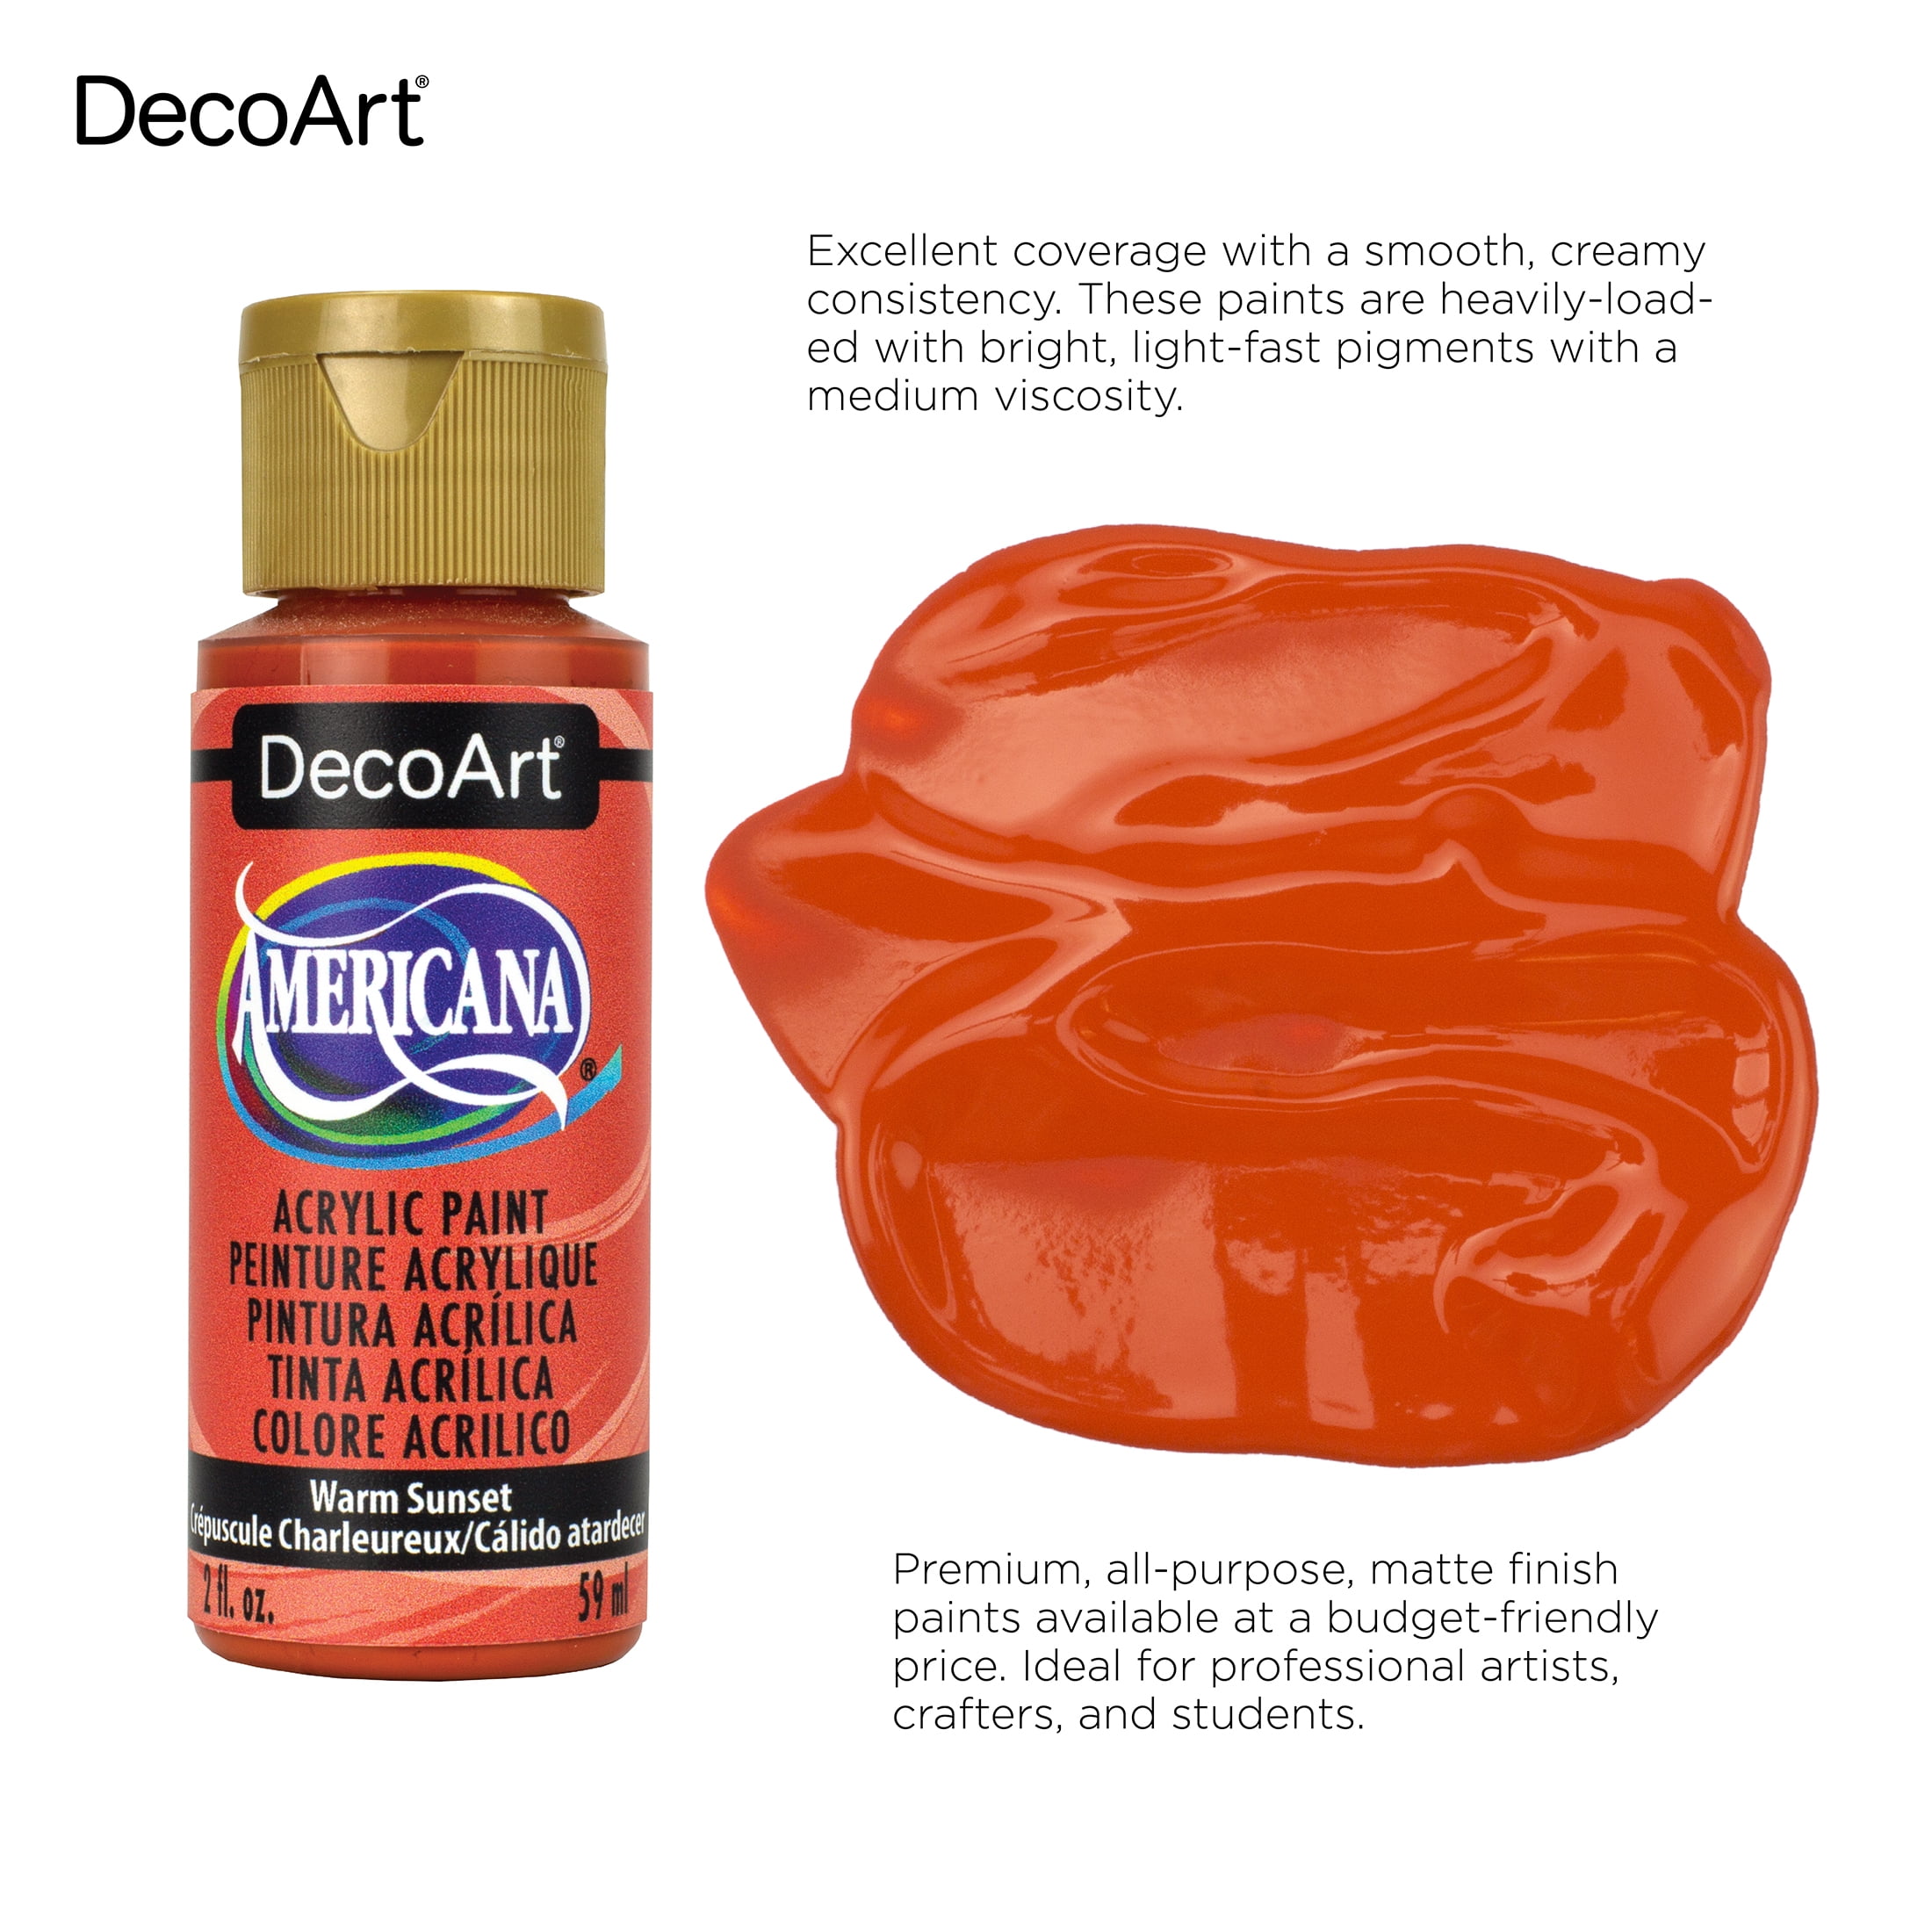 DecoArt Americana Acrylic Paint 2oz-Cool White - Semi-Opaque, 1